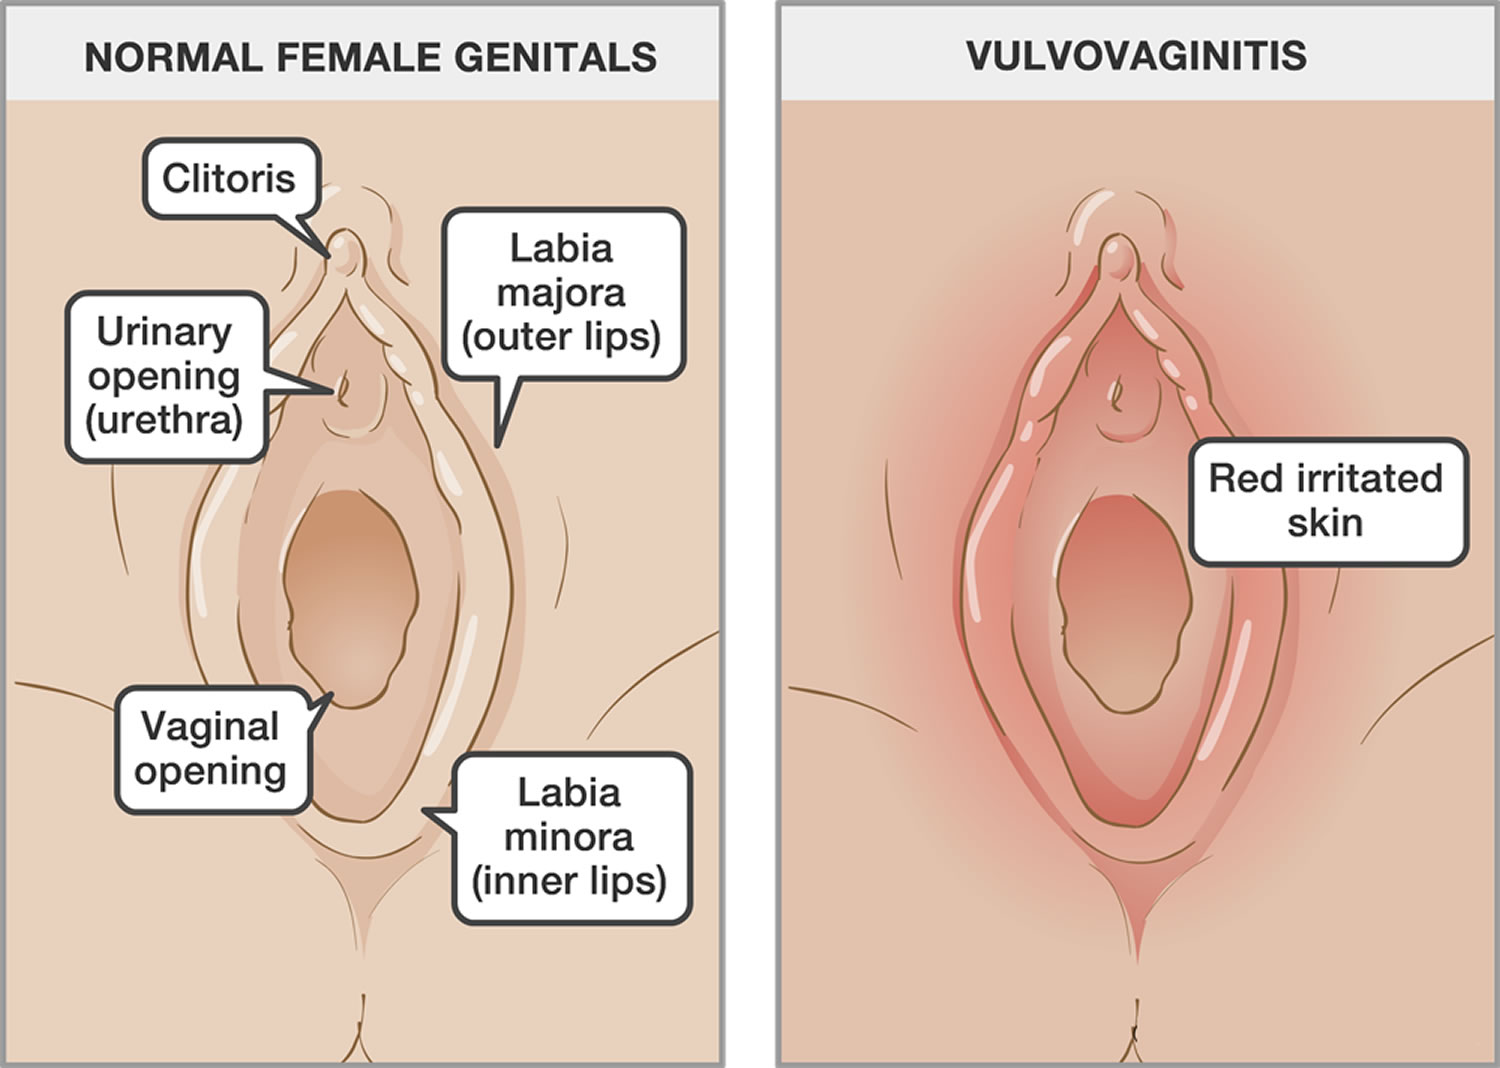 Swollen vagina and clitoris